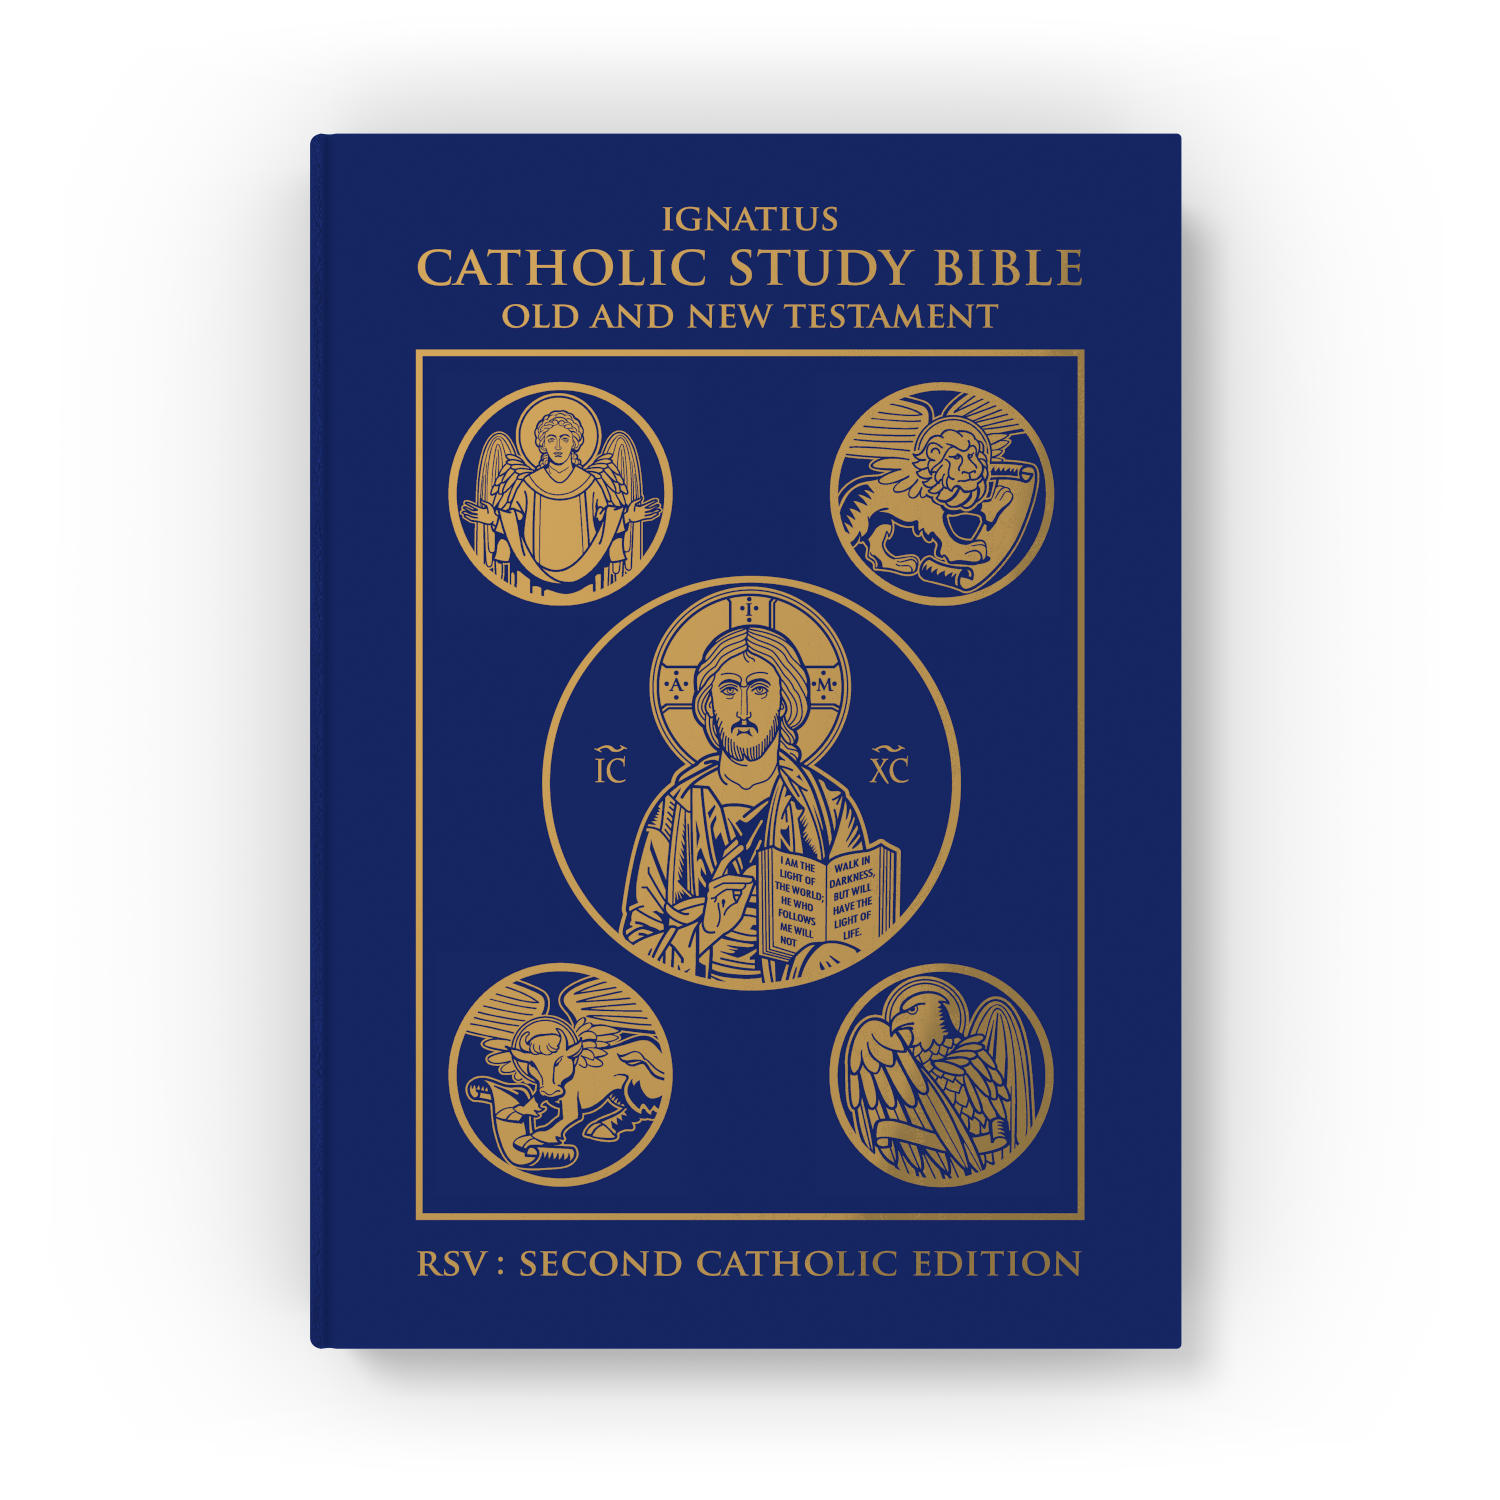 Ignatius Catholic Study Bible - Old and New Testament - Hardcover